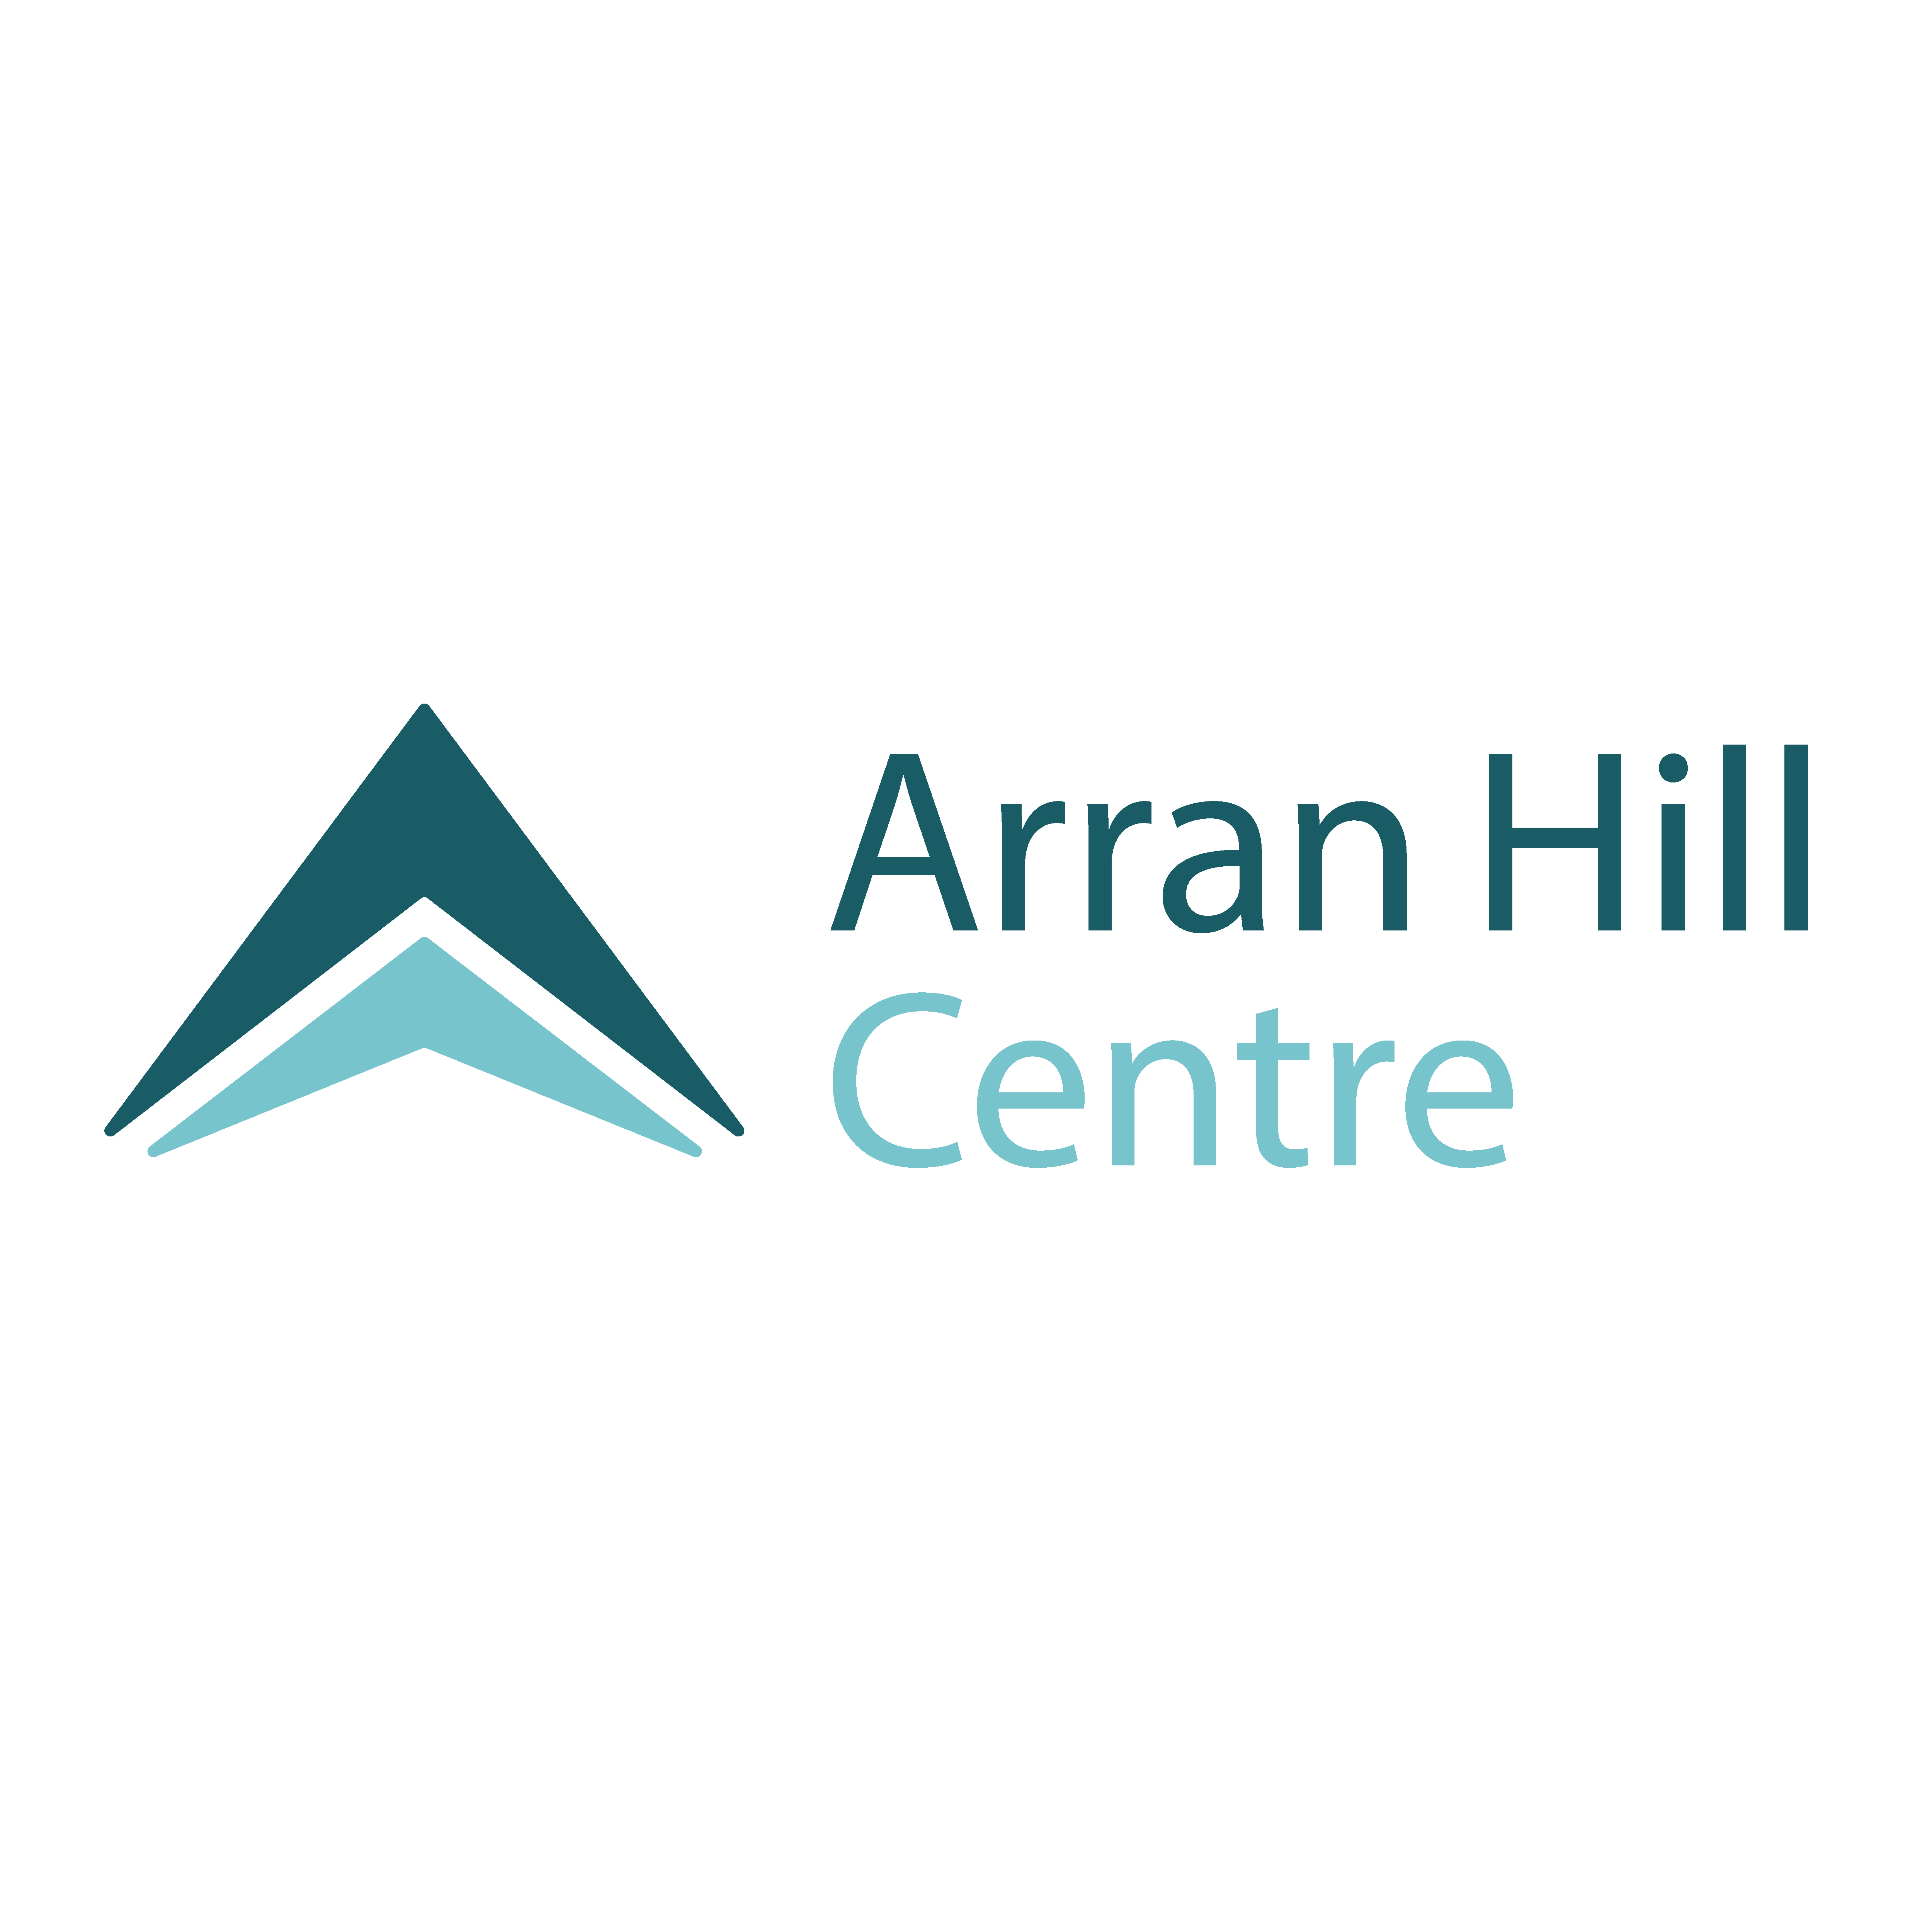 Arran Hill Centre